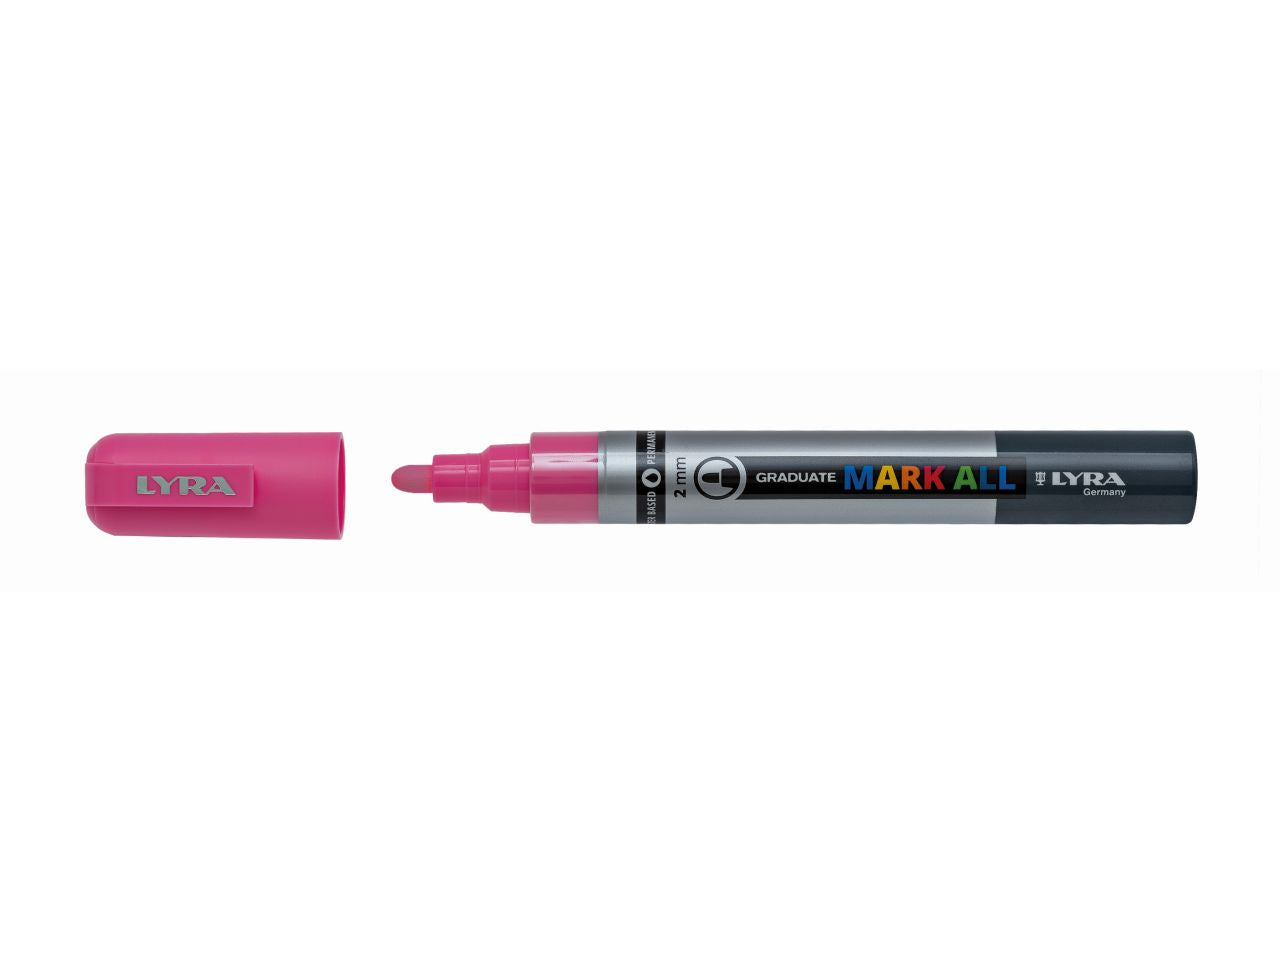 Lyra marcatore all 2mm rosa 6pz